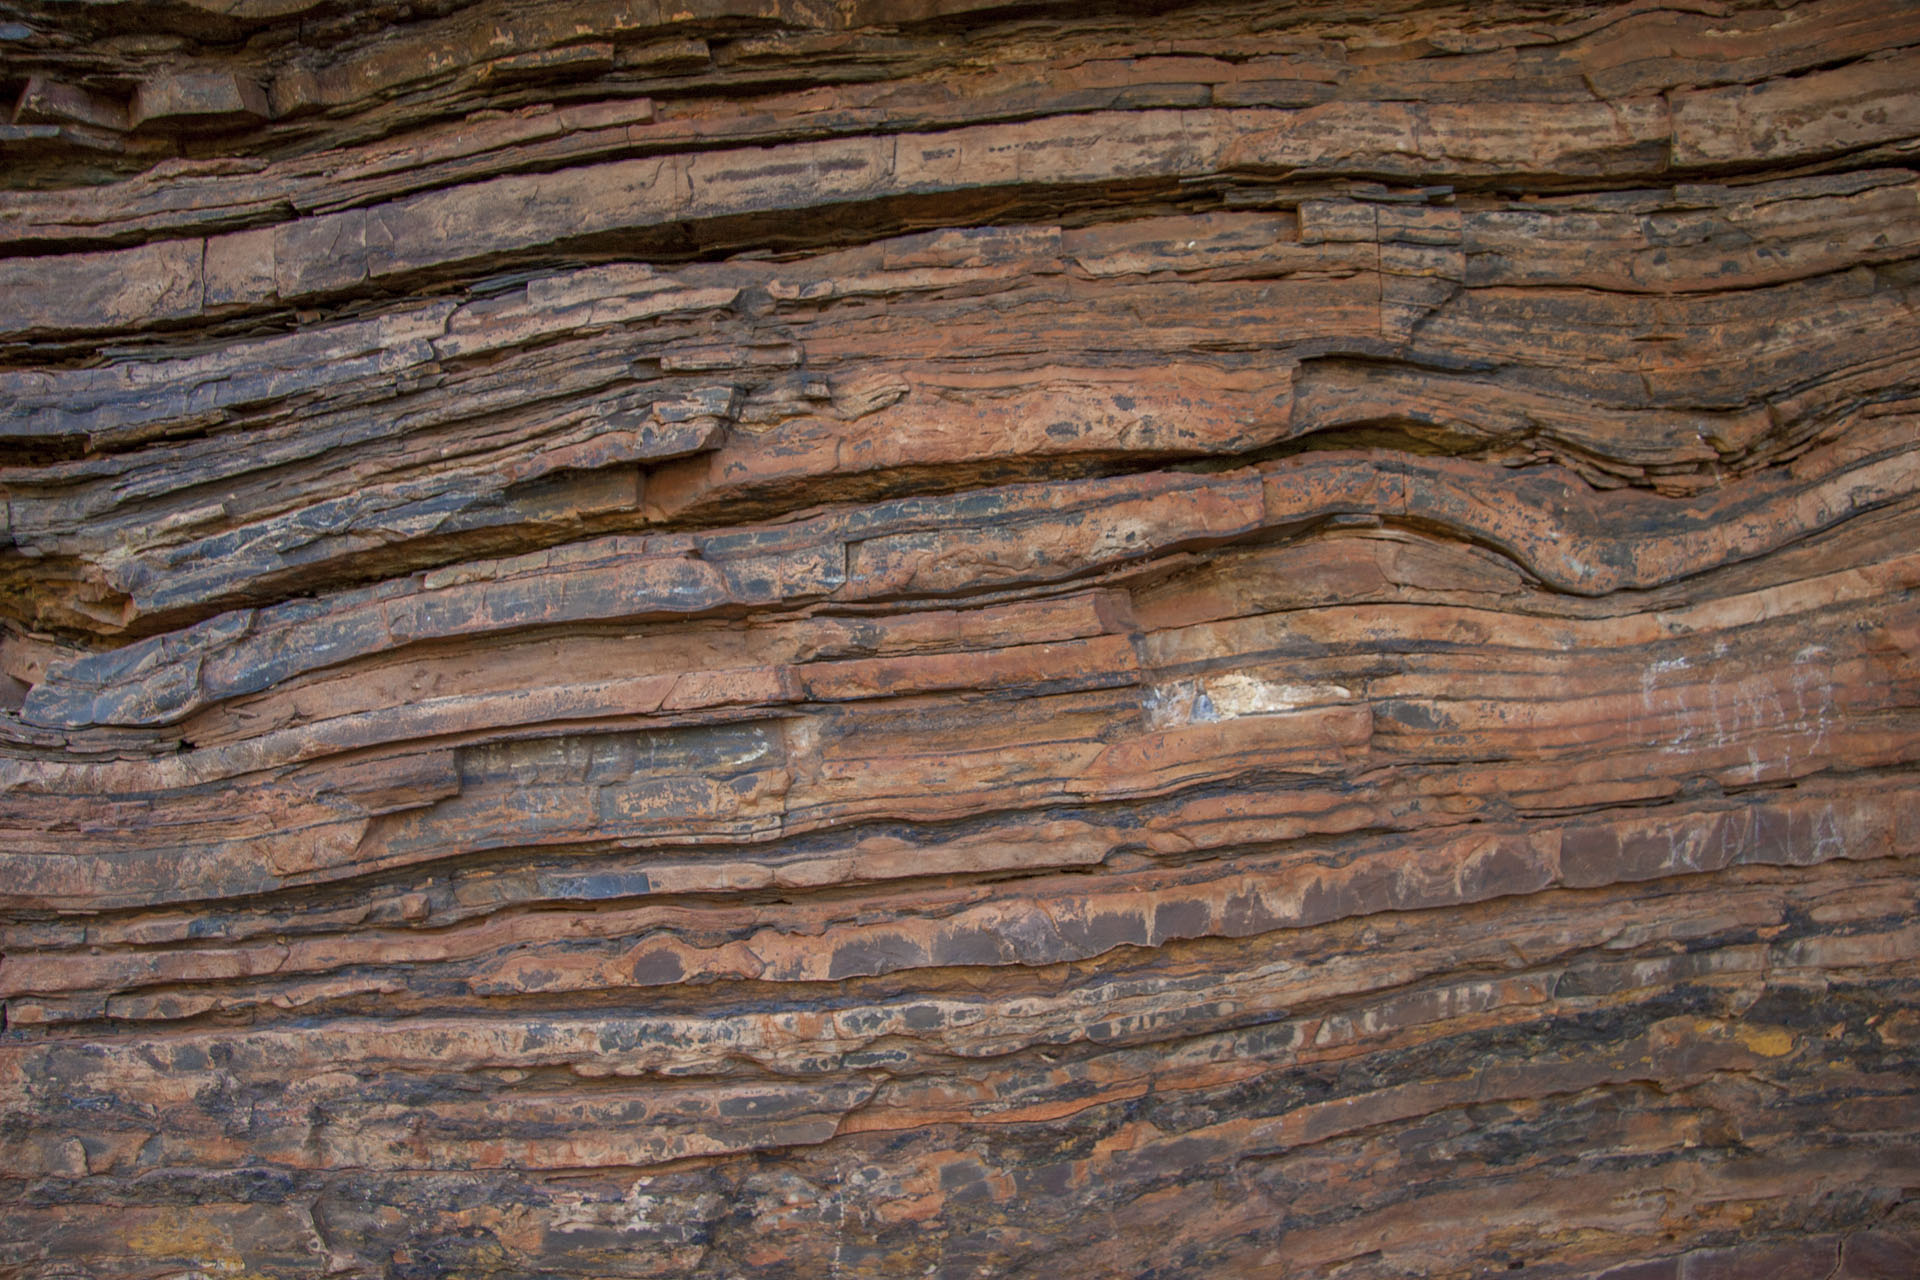 The layered rocks.